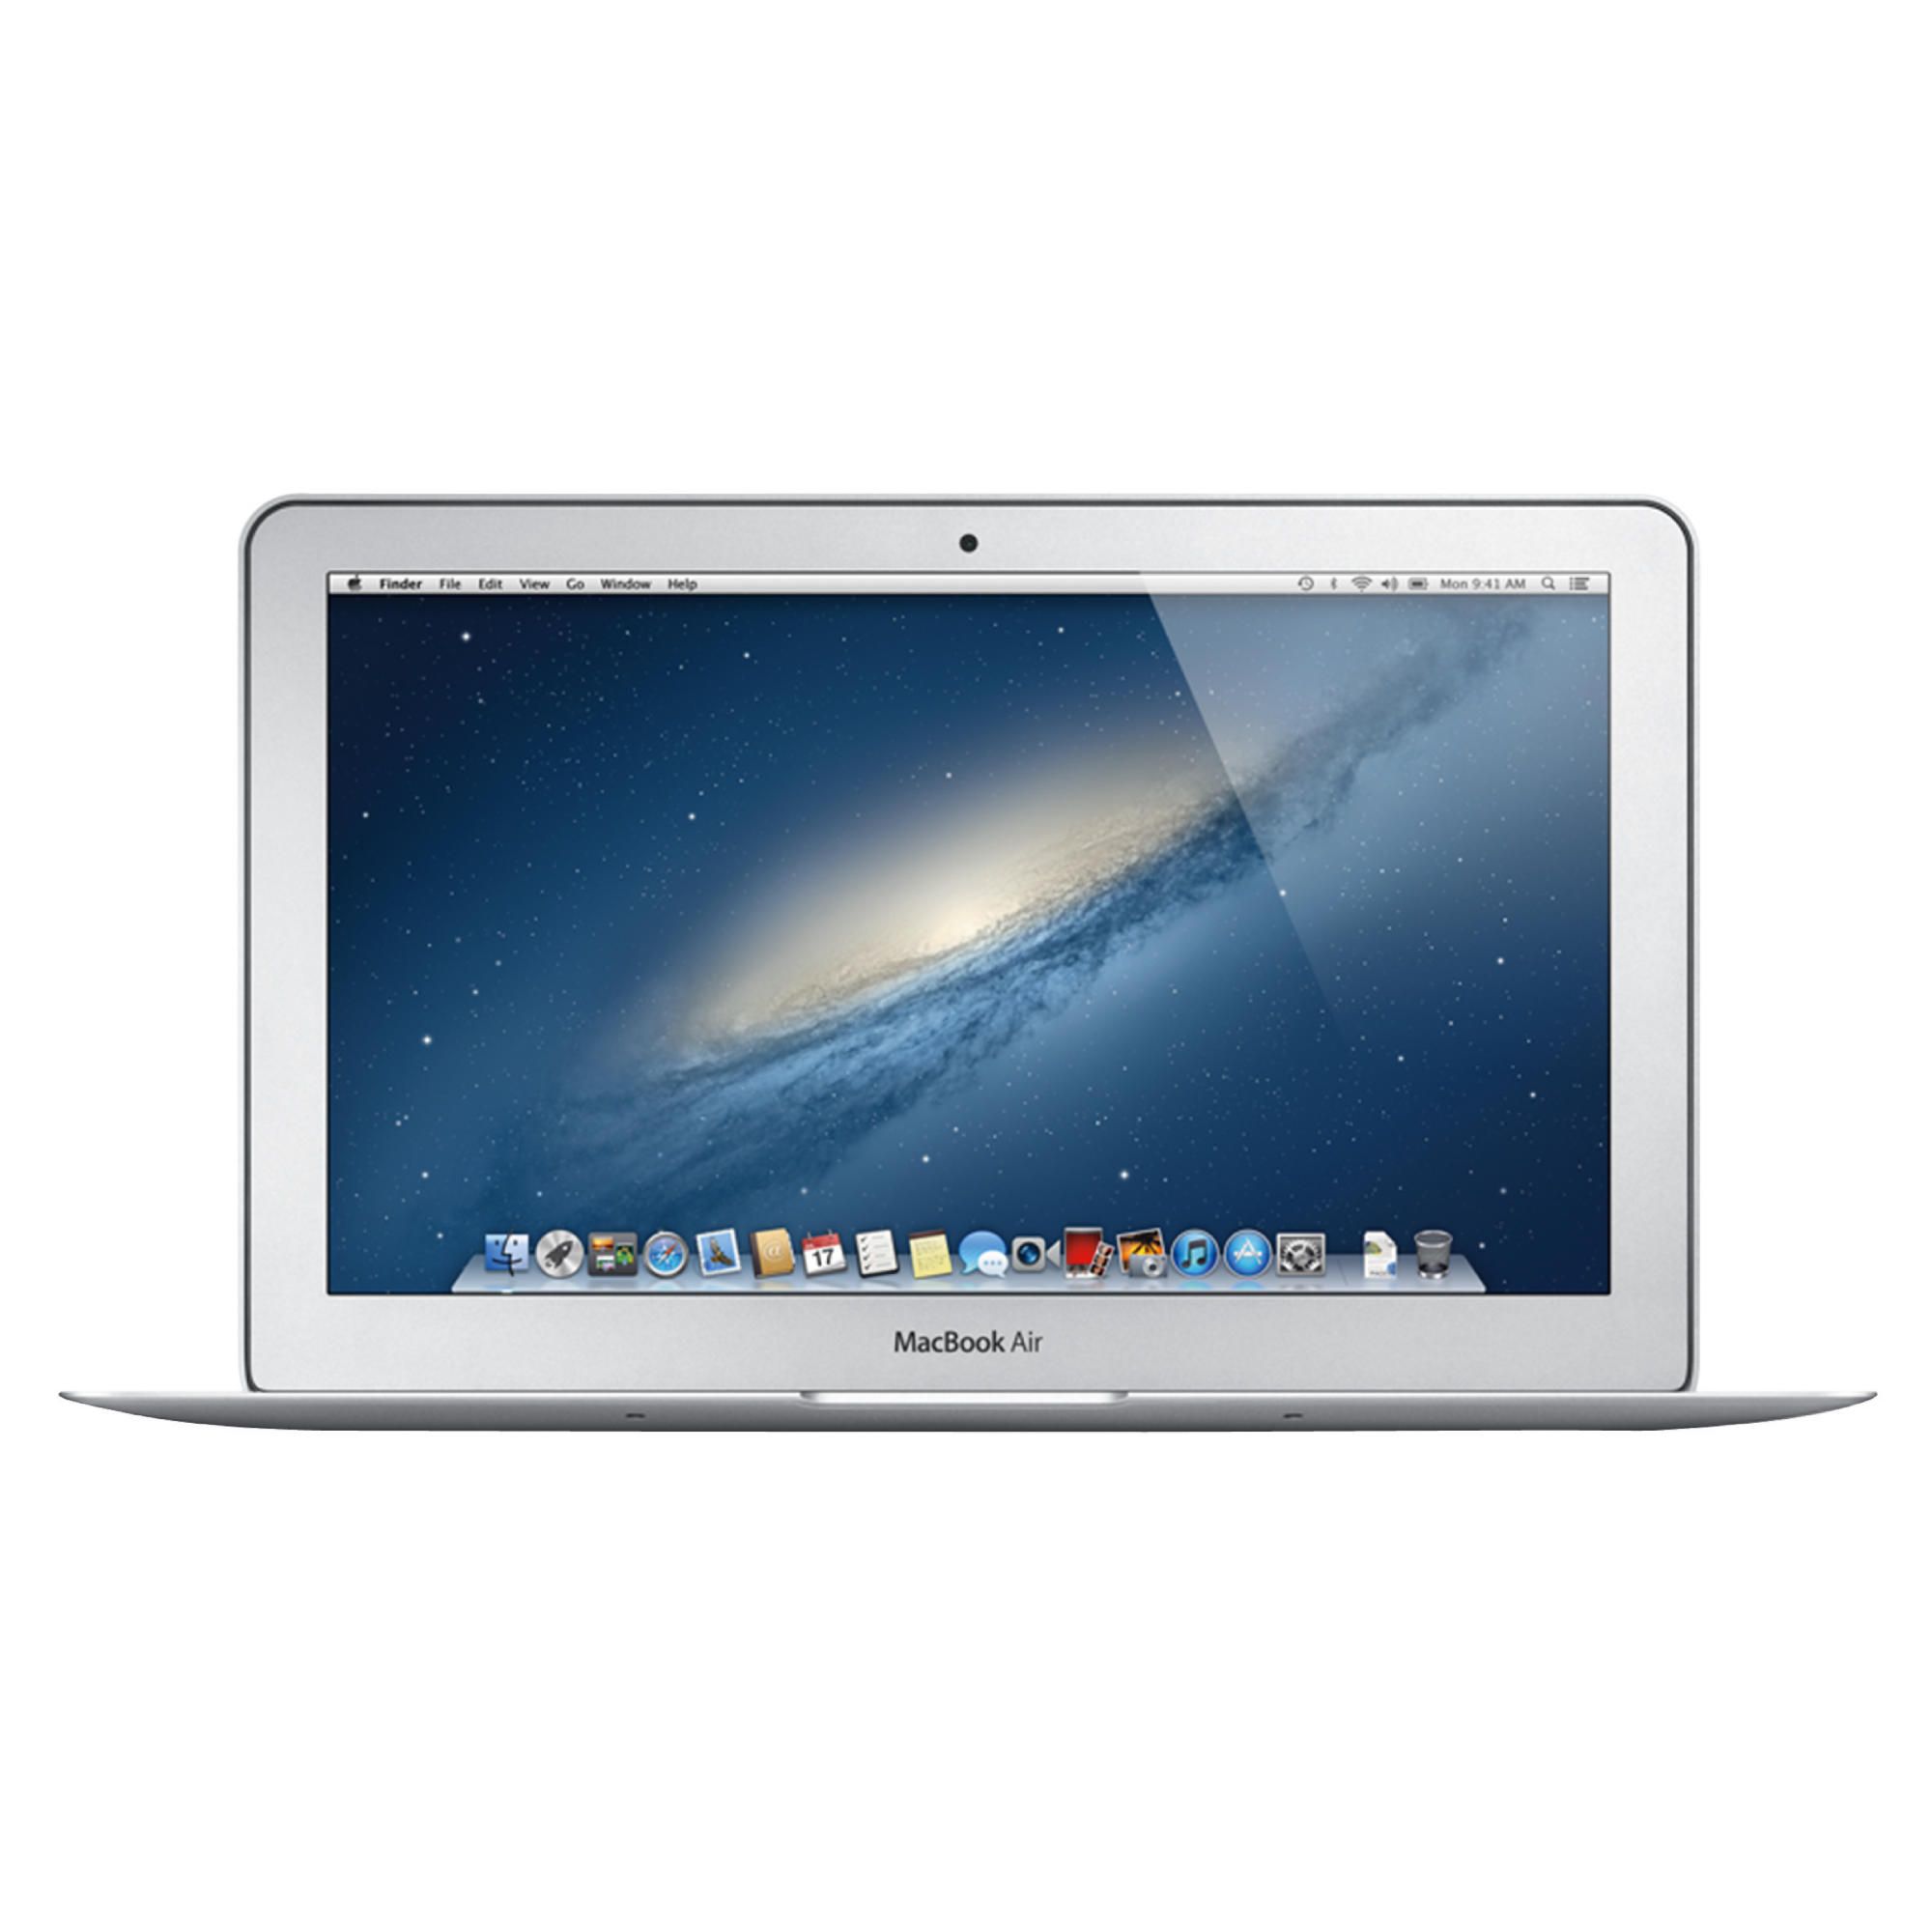 Apple MD712B/A New MacBook Air (Intel® Core™ i5, 1.3GHz, 4GB, 256GB, 11.6”) Silver